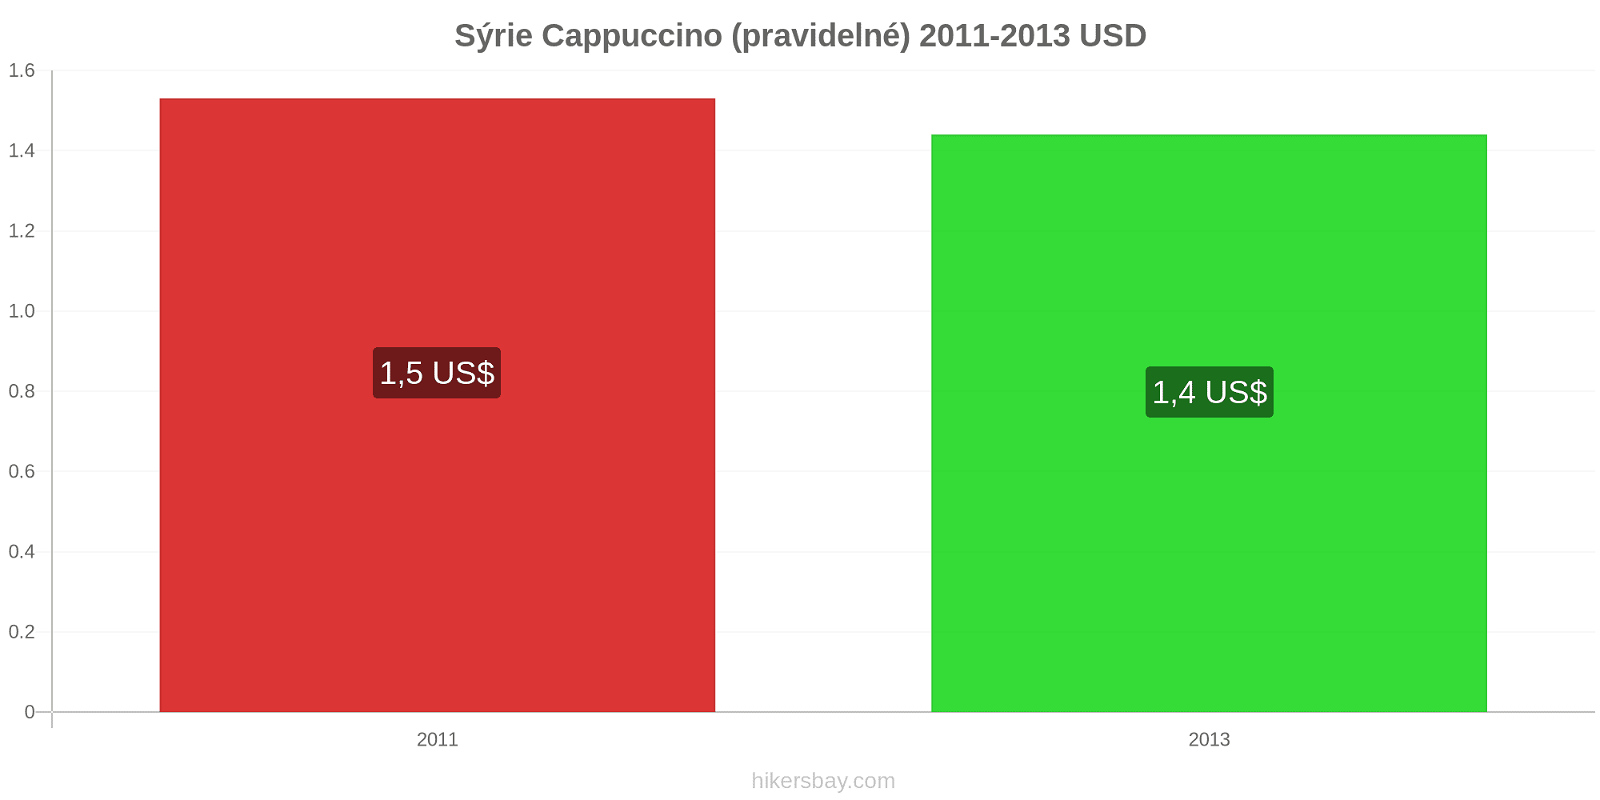 Sýrie změny cen Cappuccino hikersbay.com